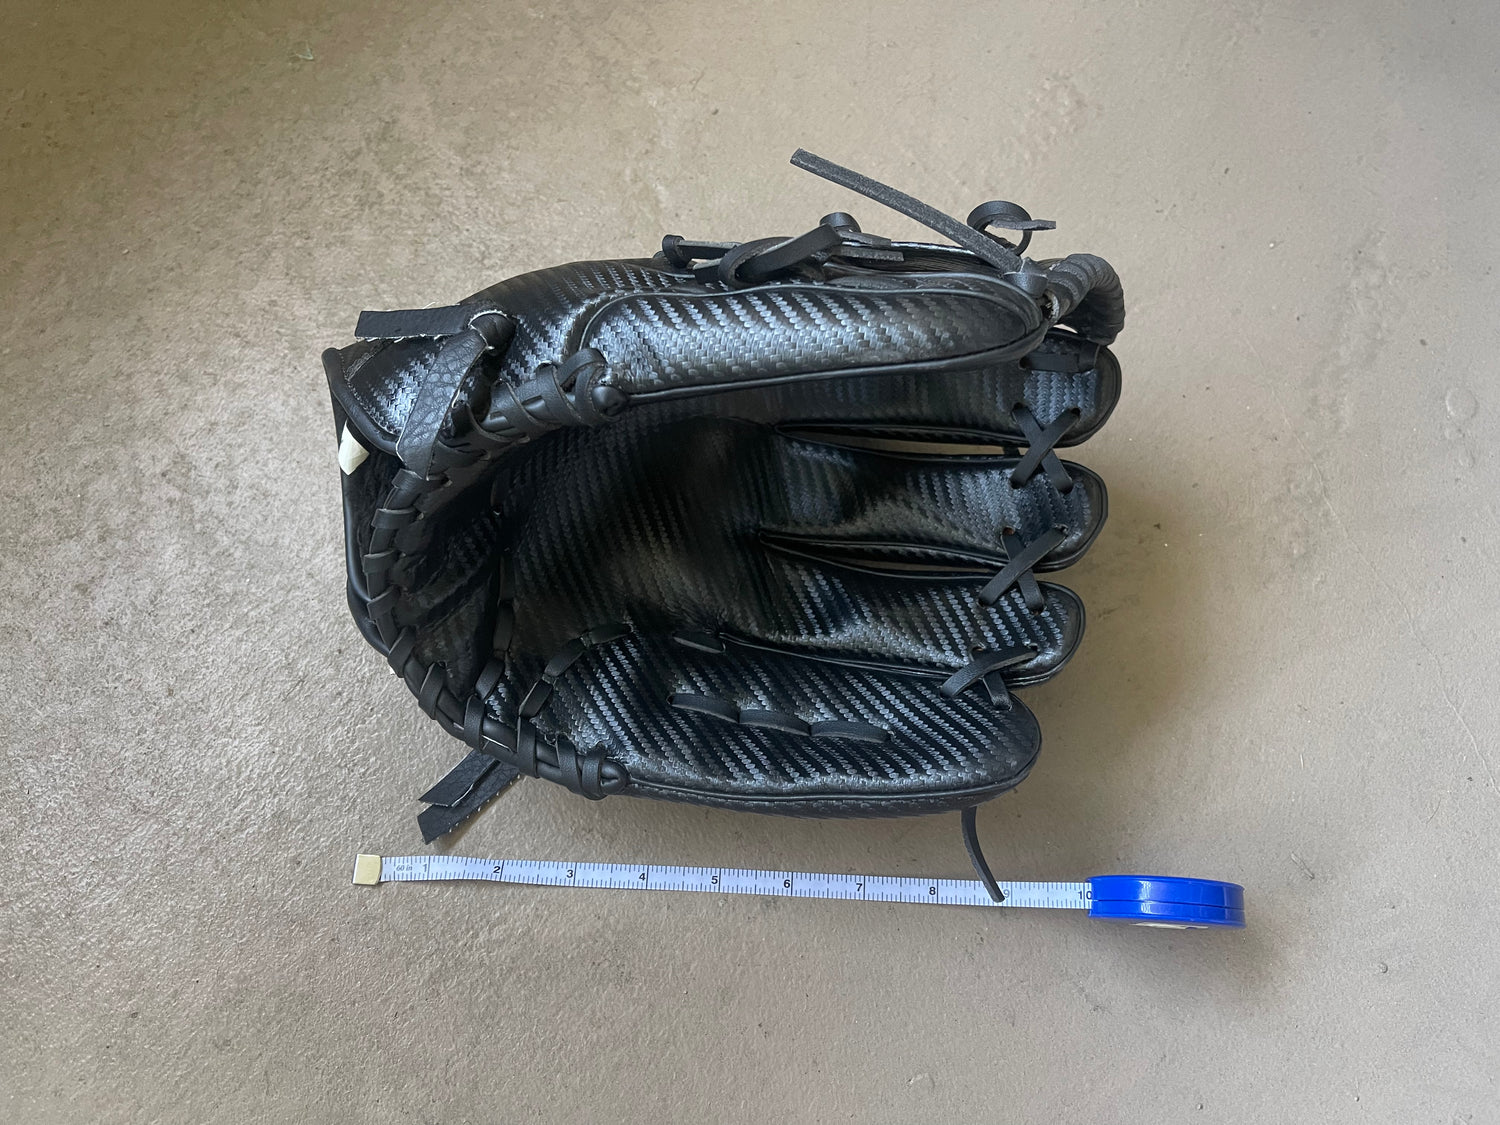 How to Measure a Baseball Glove